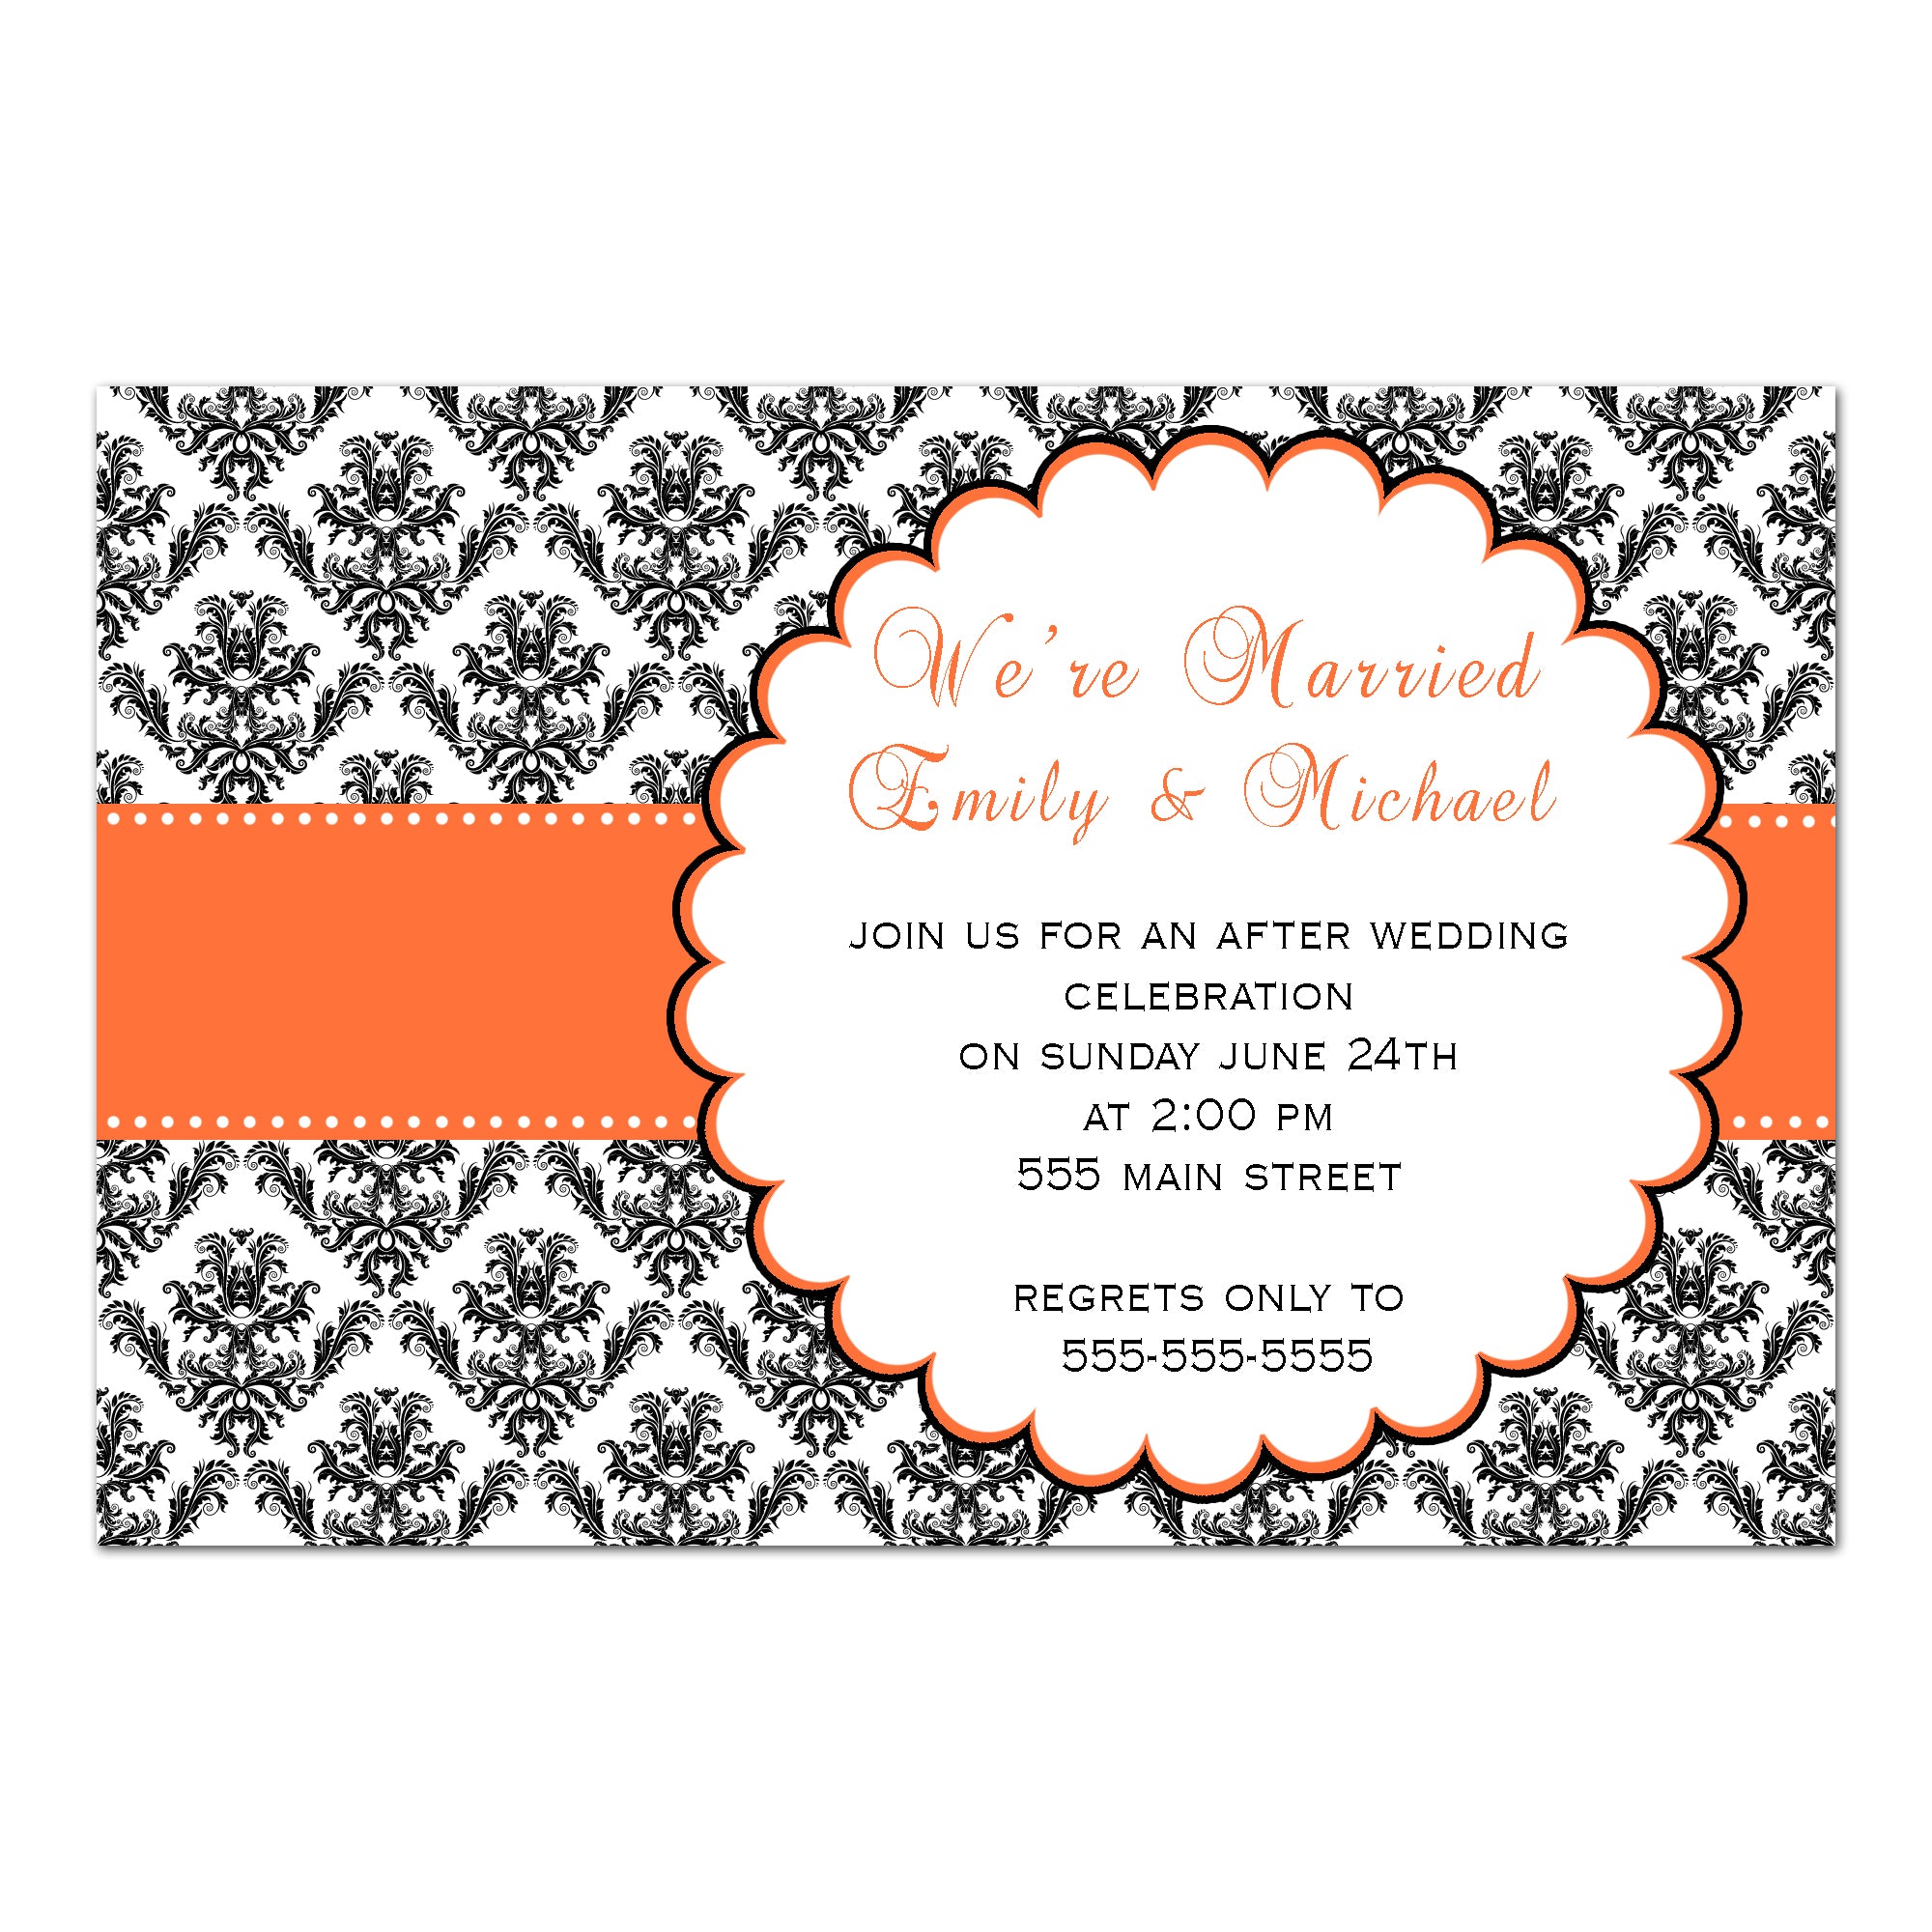 After wedding celebration invitations orange black printable